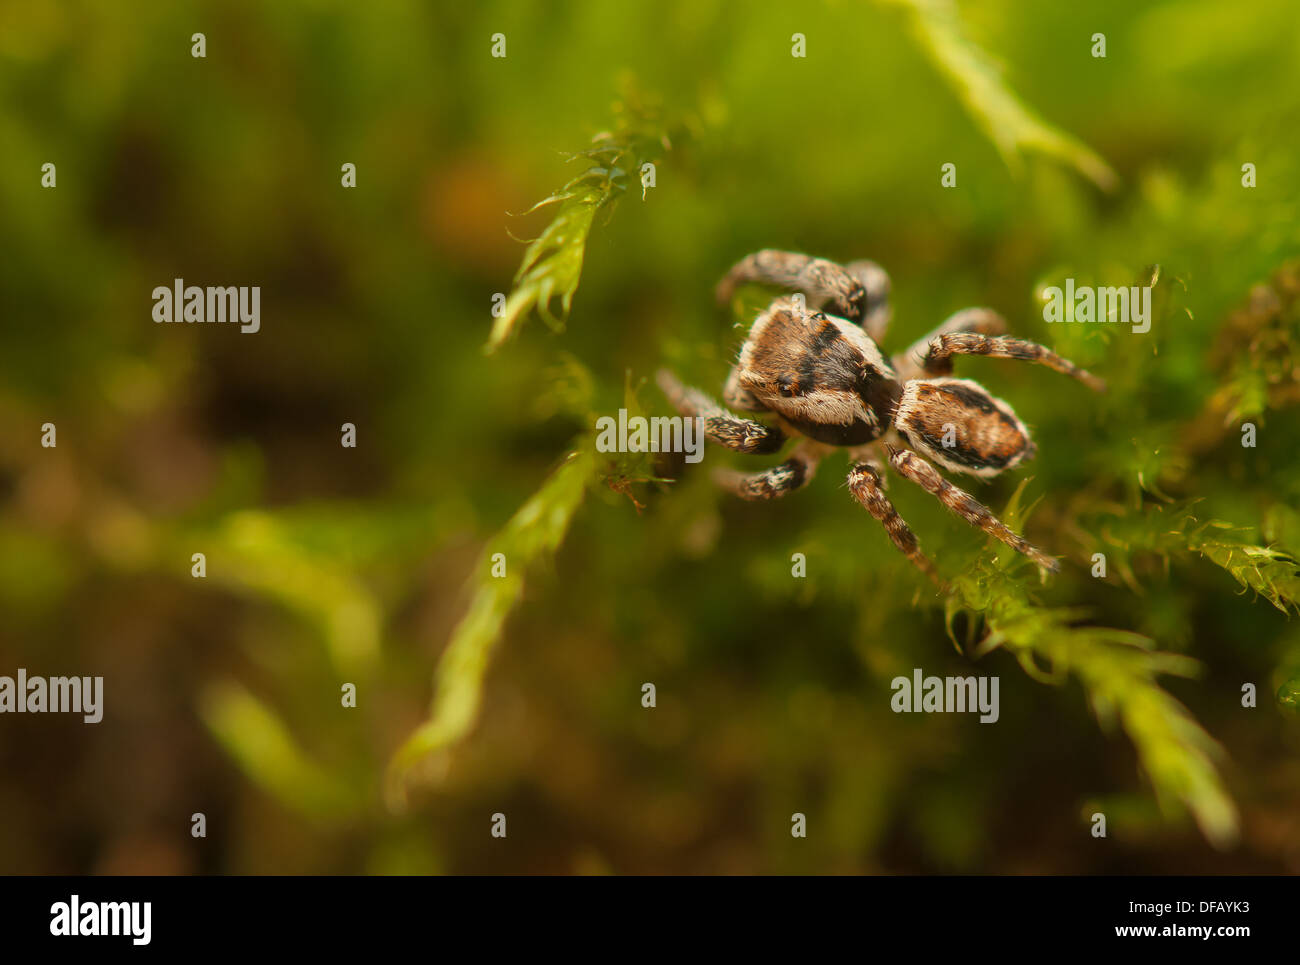 Evarcha - Jumping spider Foto de stock